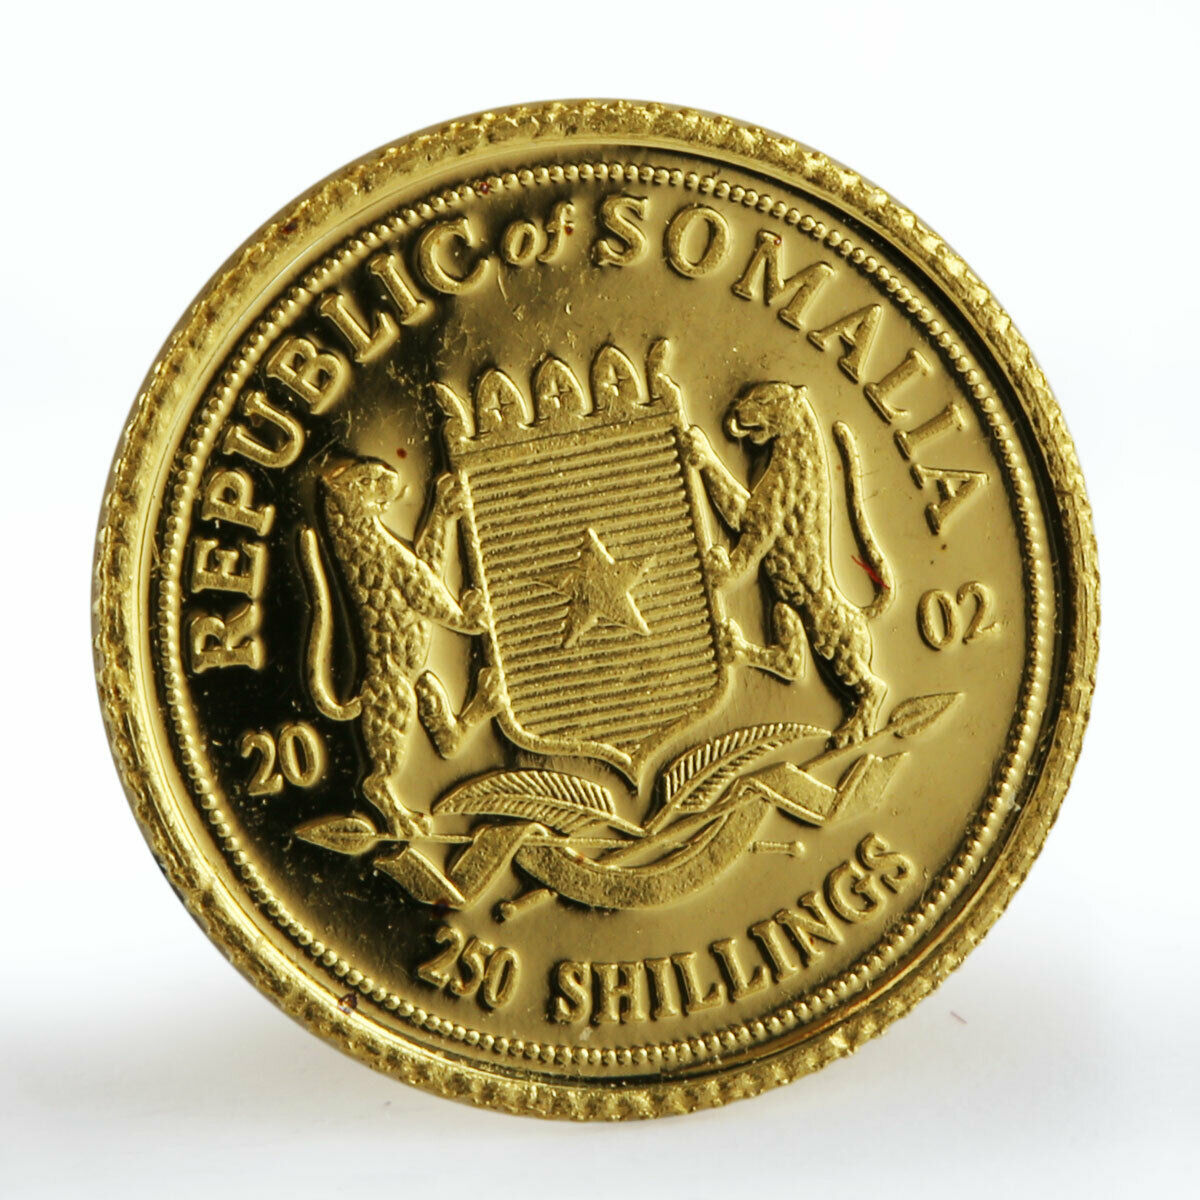 Somalia 250 shillings Heinz Ruhmann proof gold coin 2002